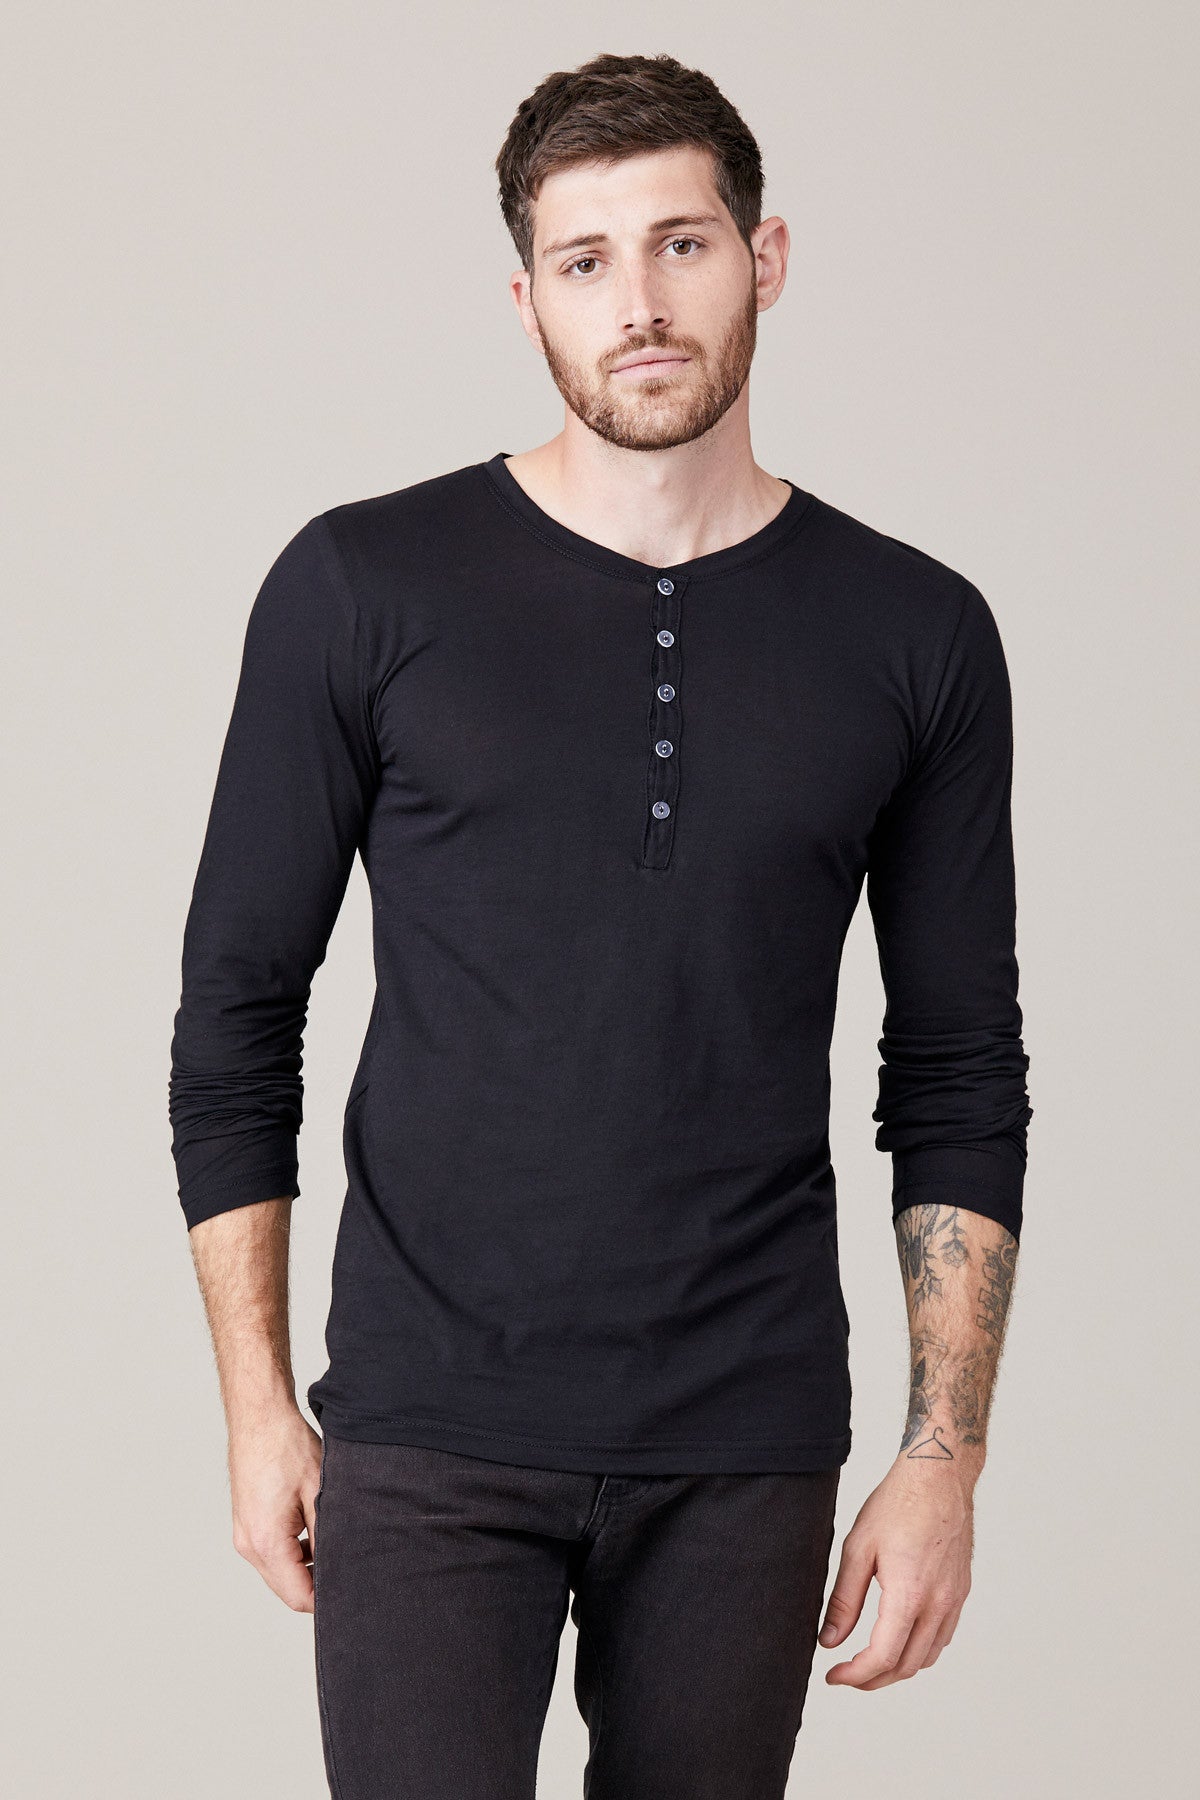 Men's Men's Long Sleeve Button Henley - Black, XXL by LNA Clothing